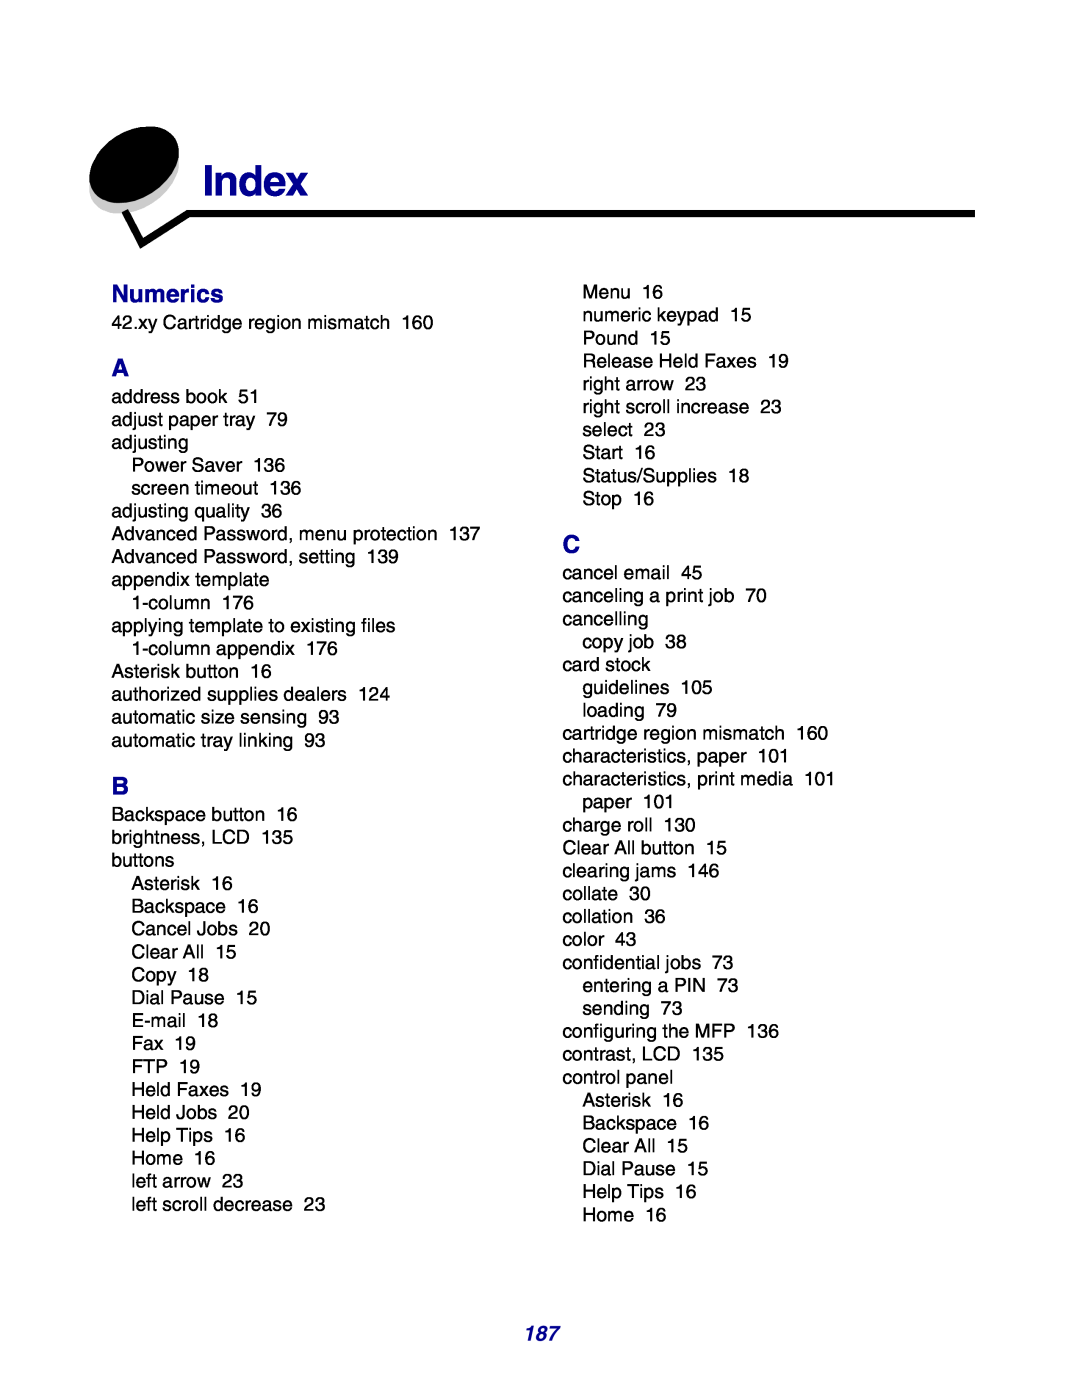 Lexmark X642e manual Index, Numerics 